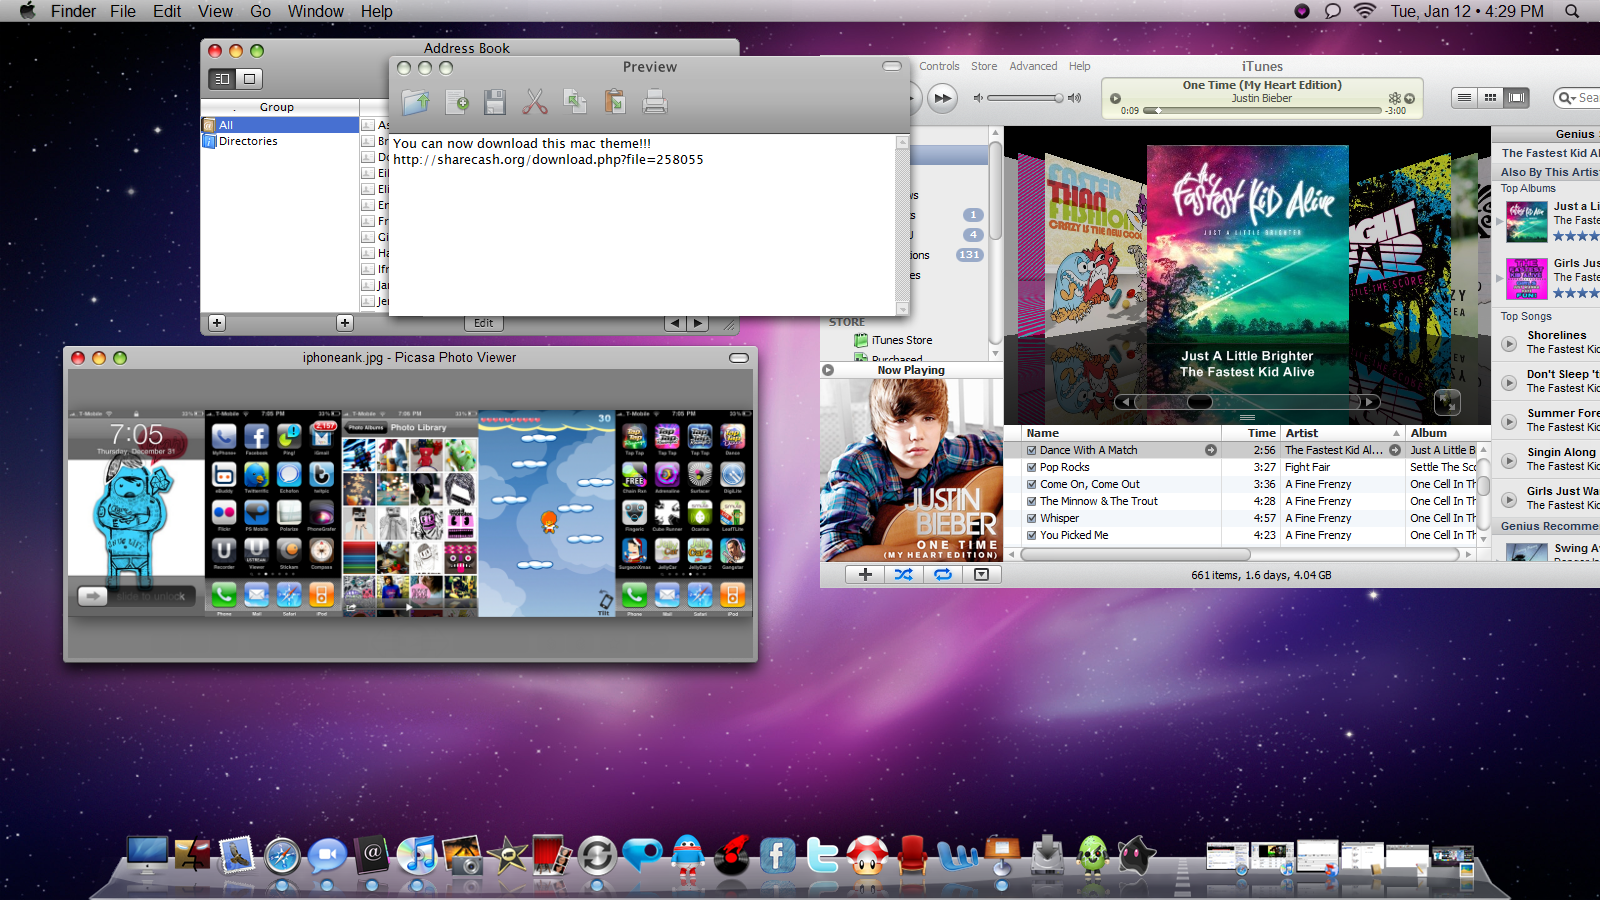 Mac theme for windows 7 free download